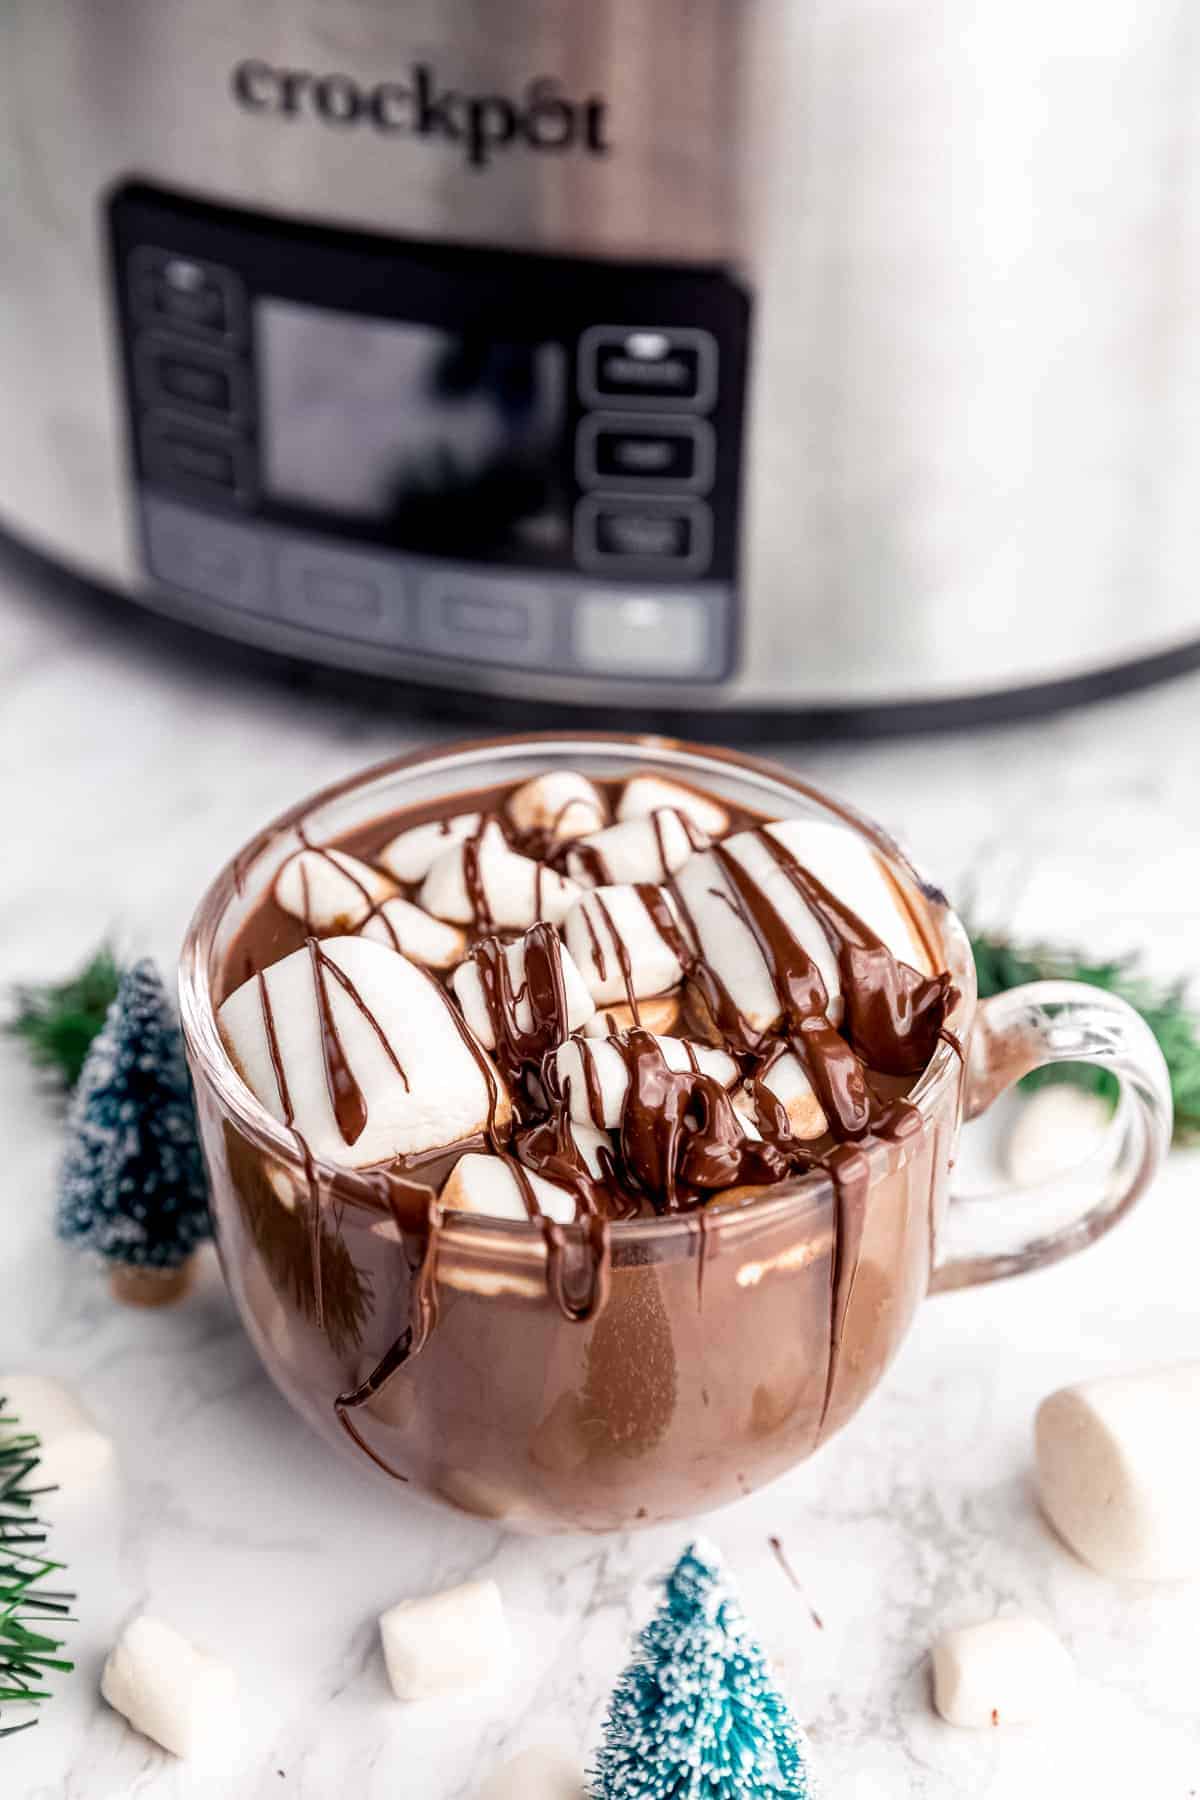 Crockpot Hot Chocolate - Kim's Cravings